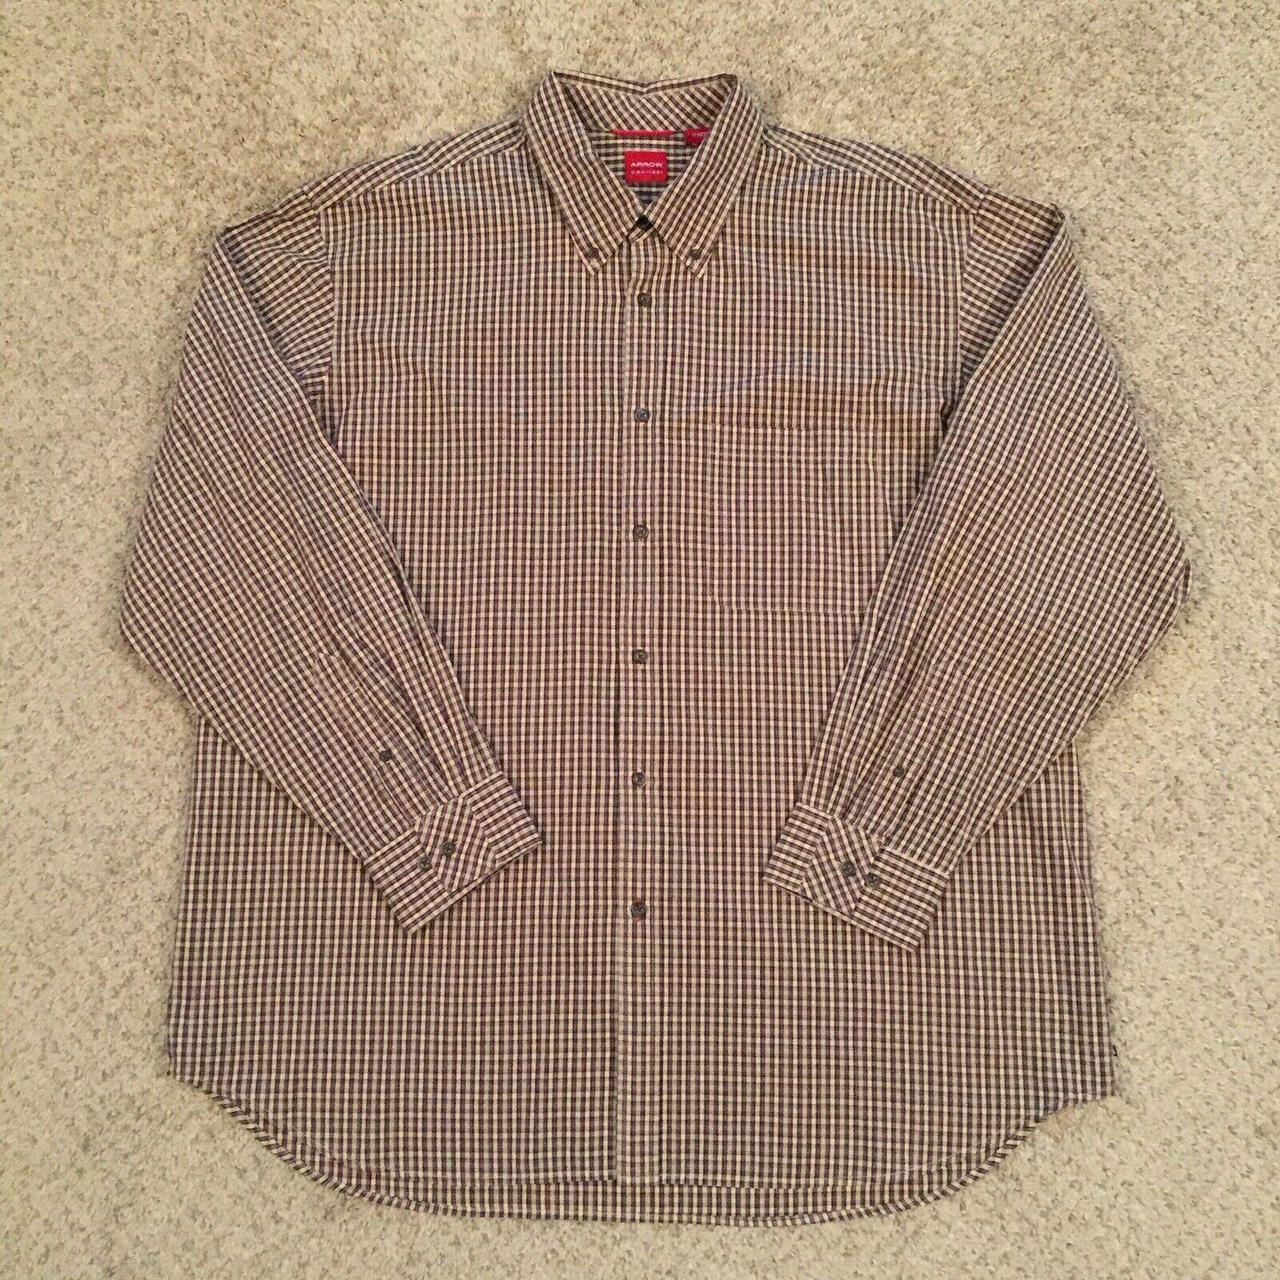 Product Image 1 - Arrow Shirt XL Long Sleeve